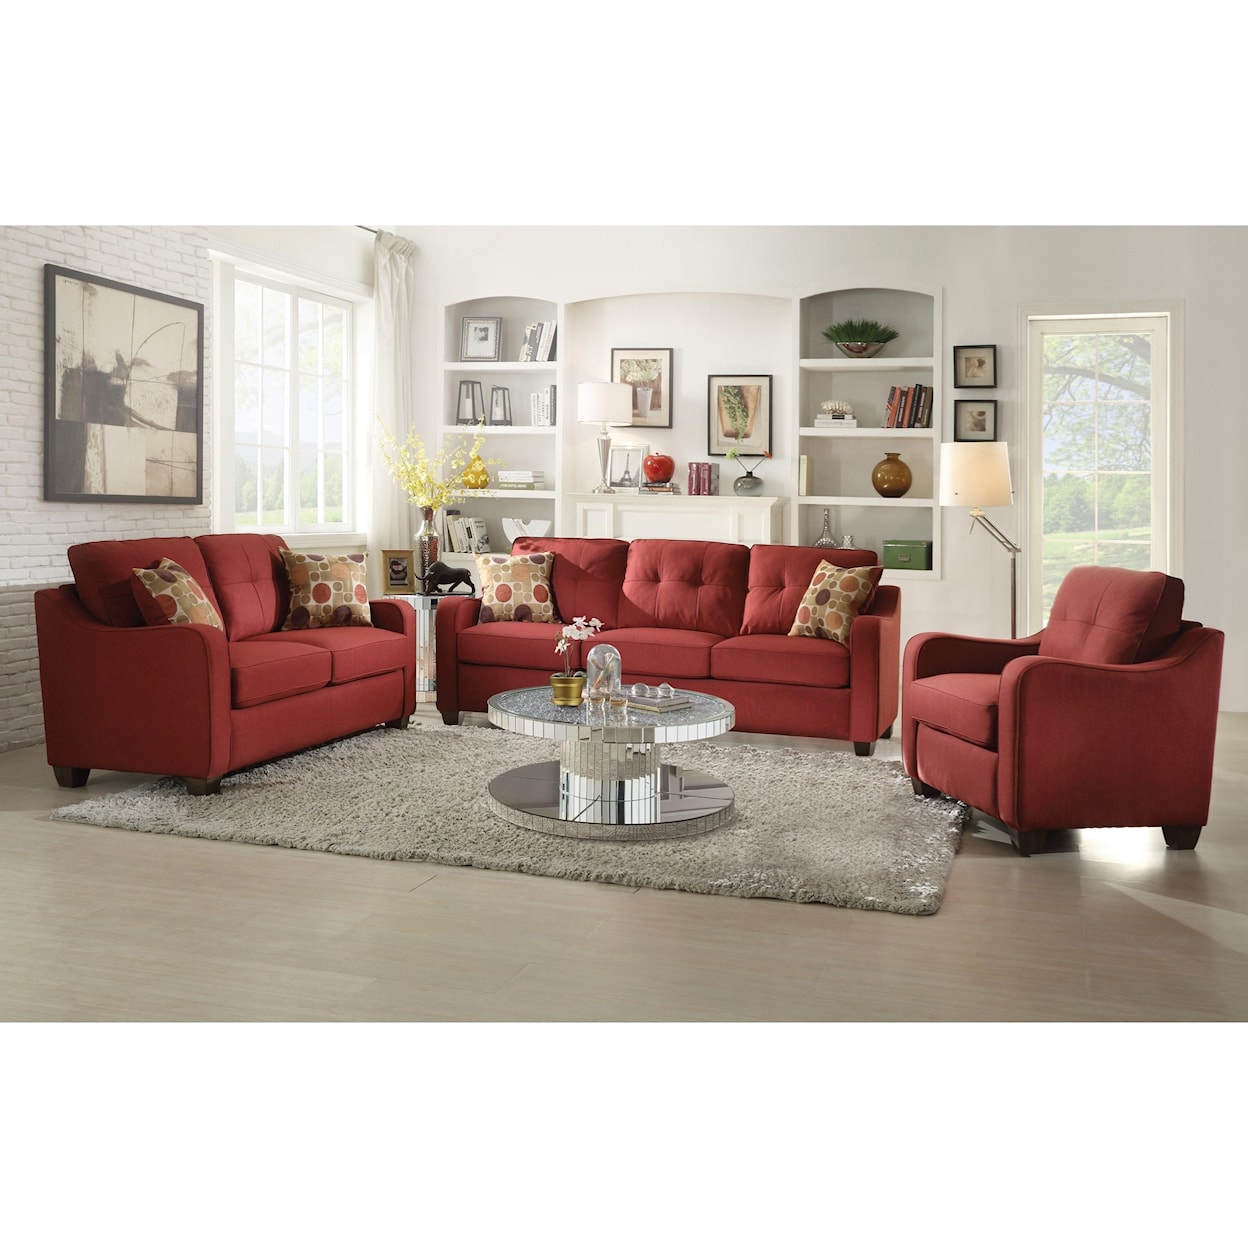 Acme Furniture Cleavon II Chair